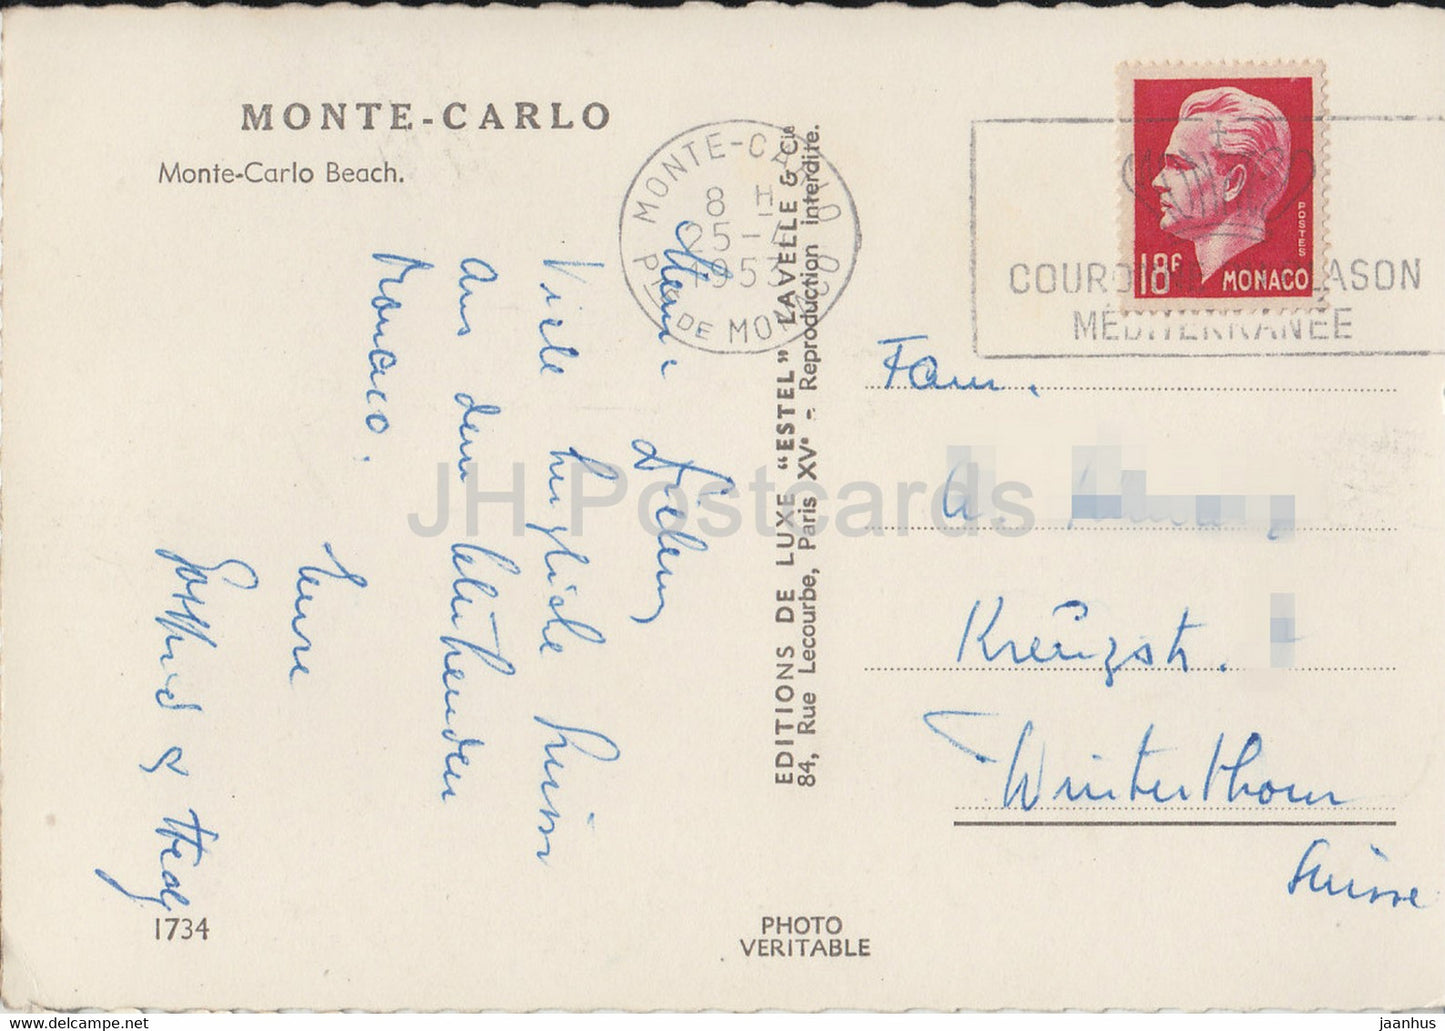 Strand von Monte Carlo - alte Postkarte - 1953 - Monaco - gebraucht